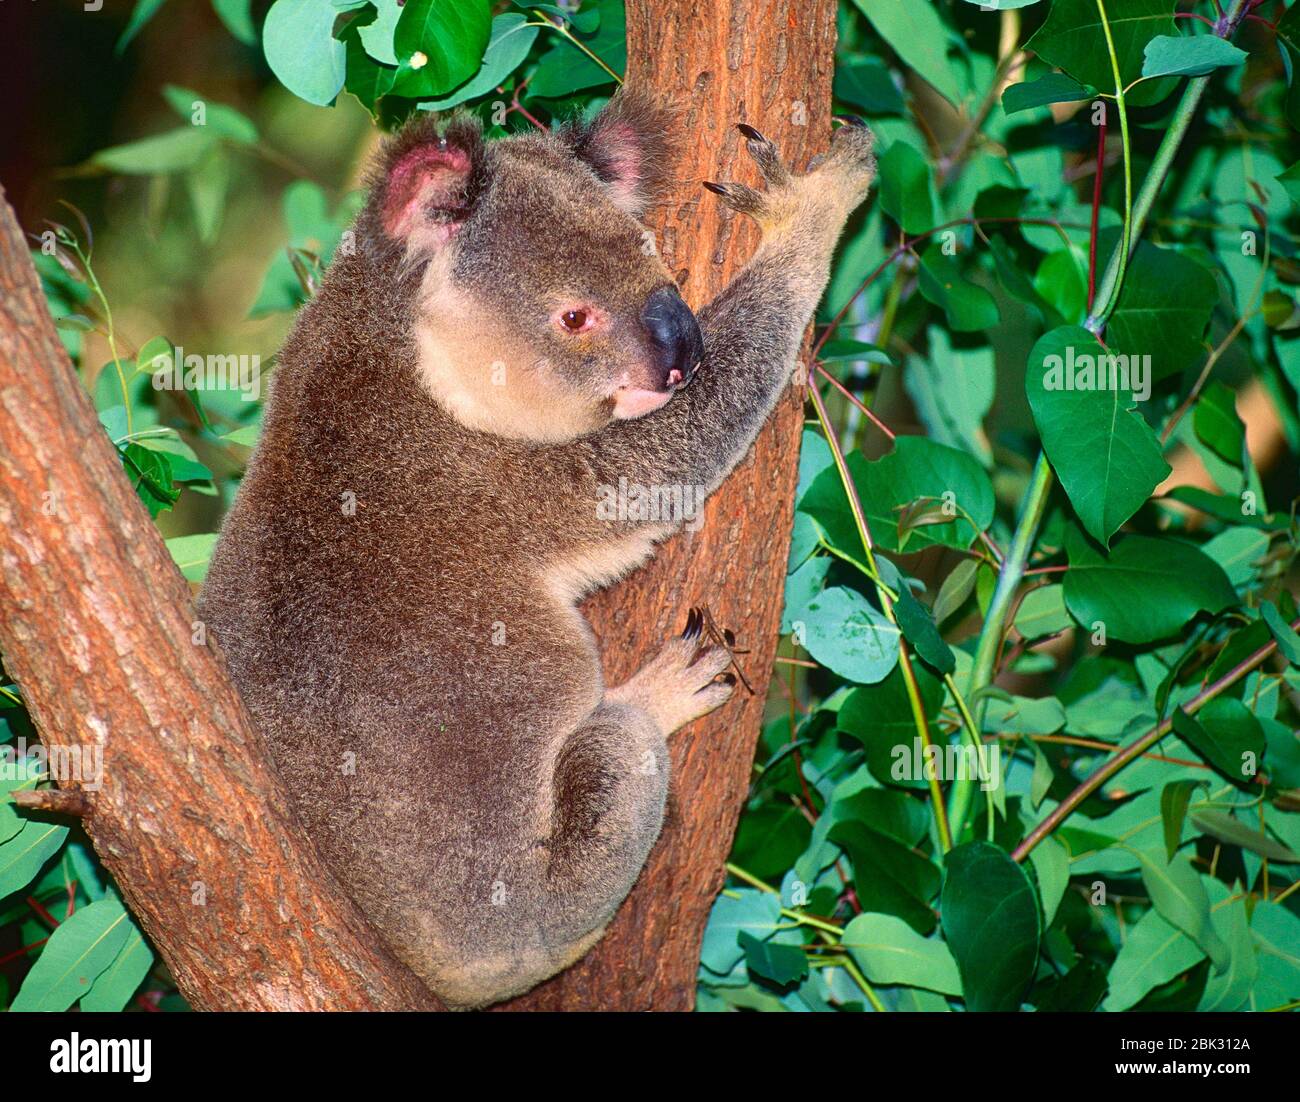 Koala, Phascolarctus cinereus, Phascolarctidae, marsupial, animal, captive, Lone Pine Koala Sanctuary, Brisbane, Queensland, Australia Stock Photo